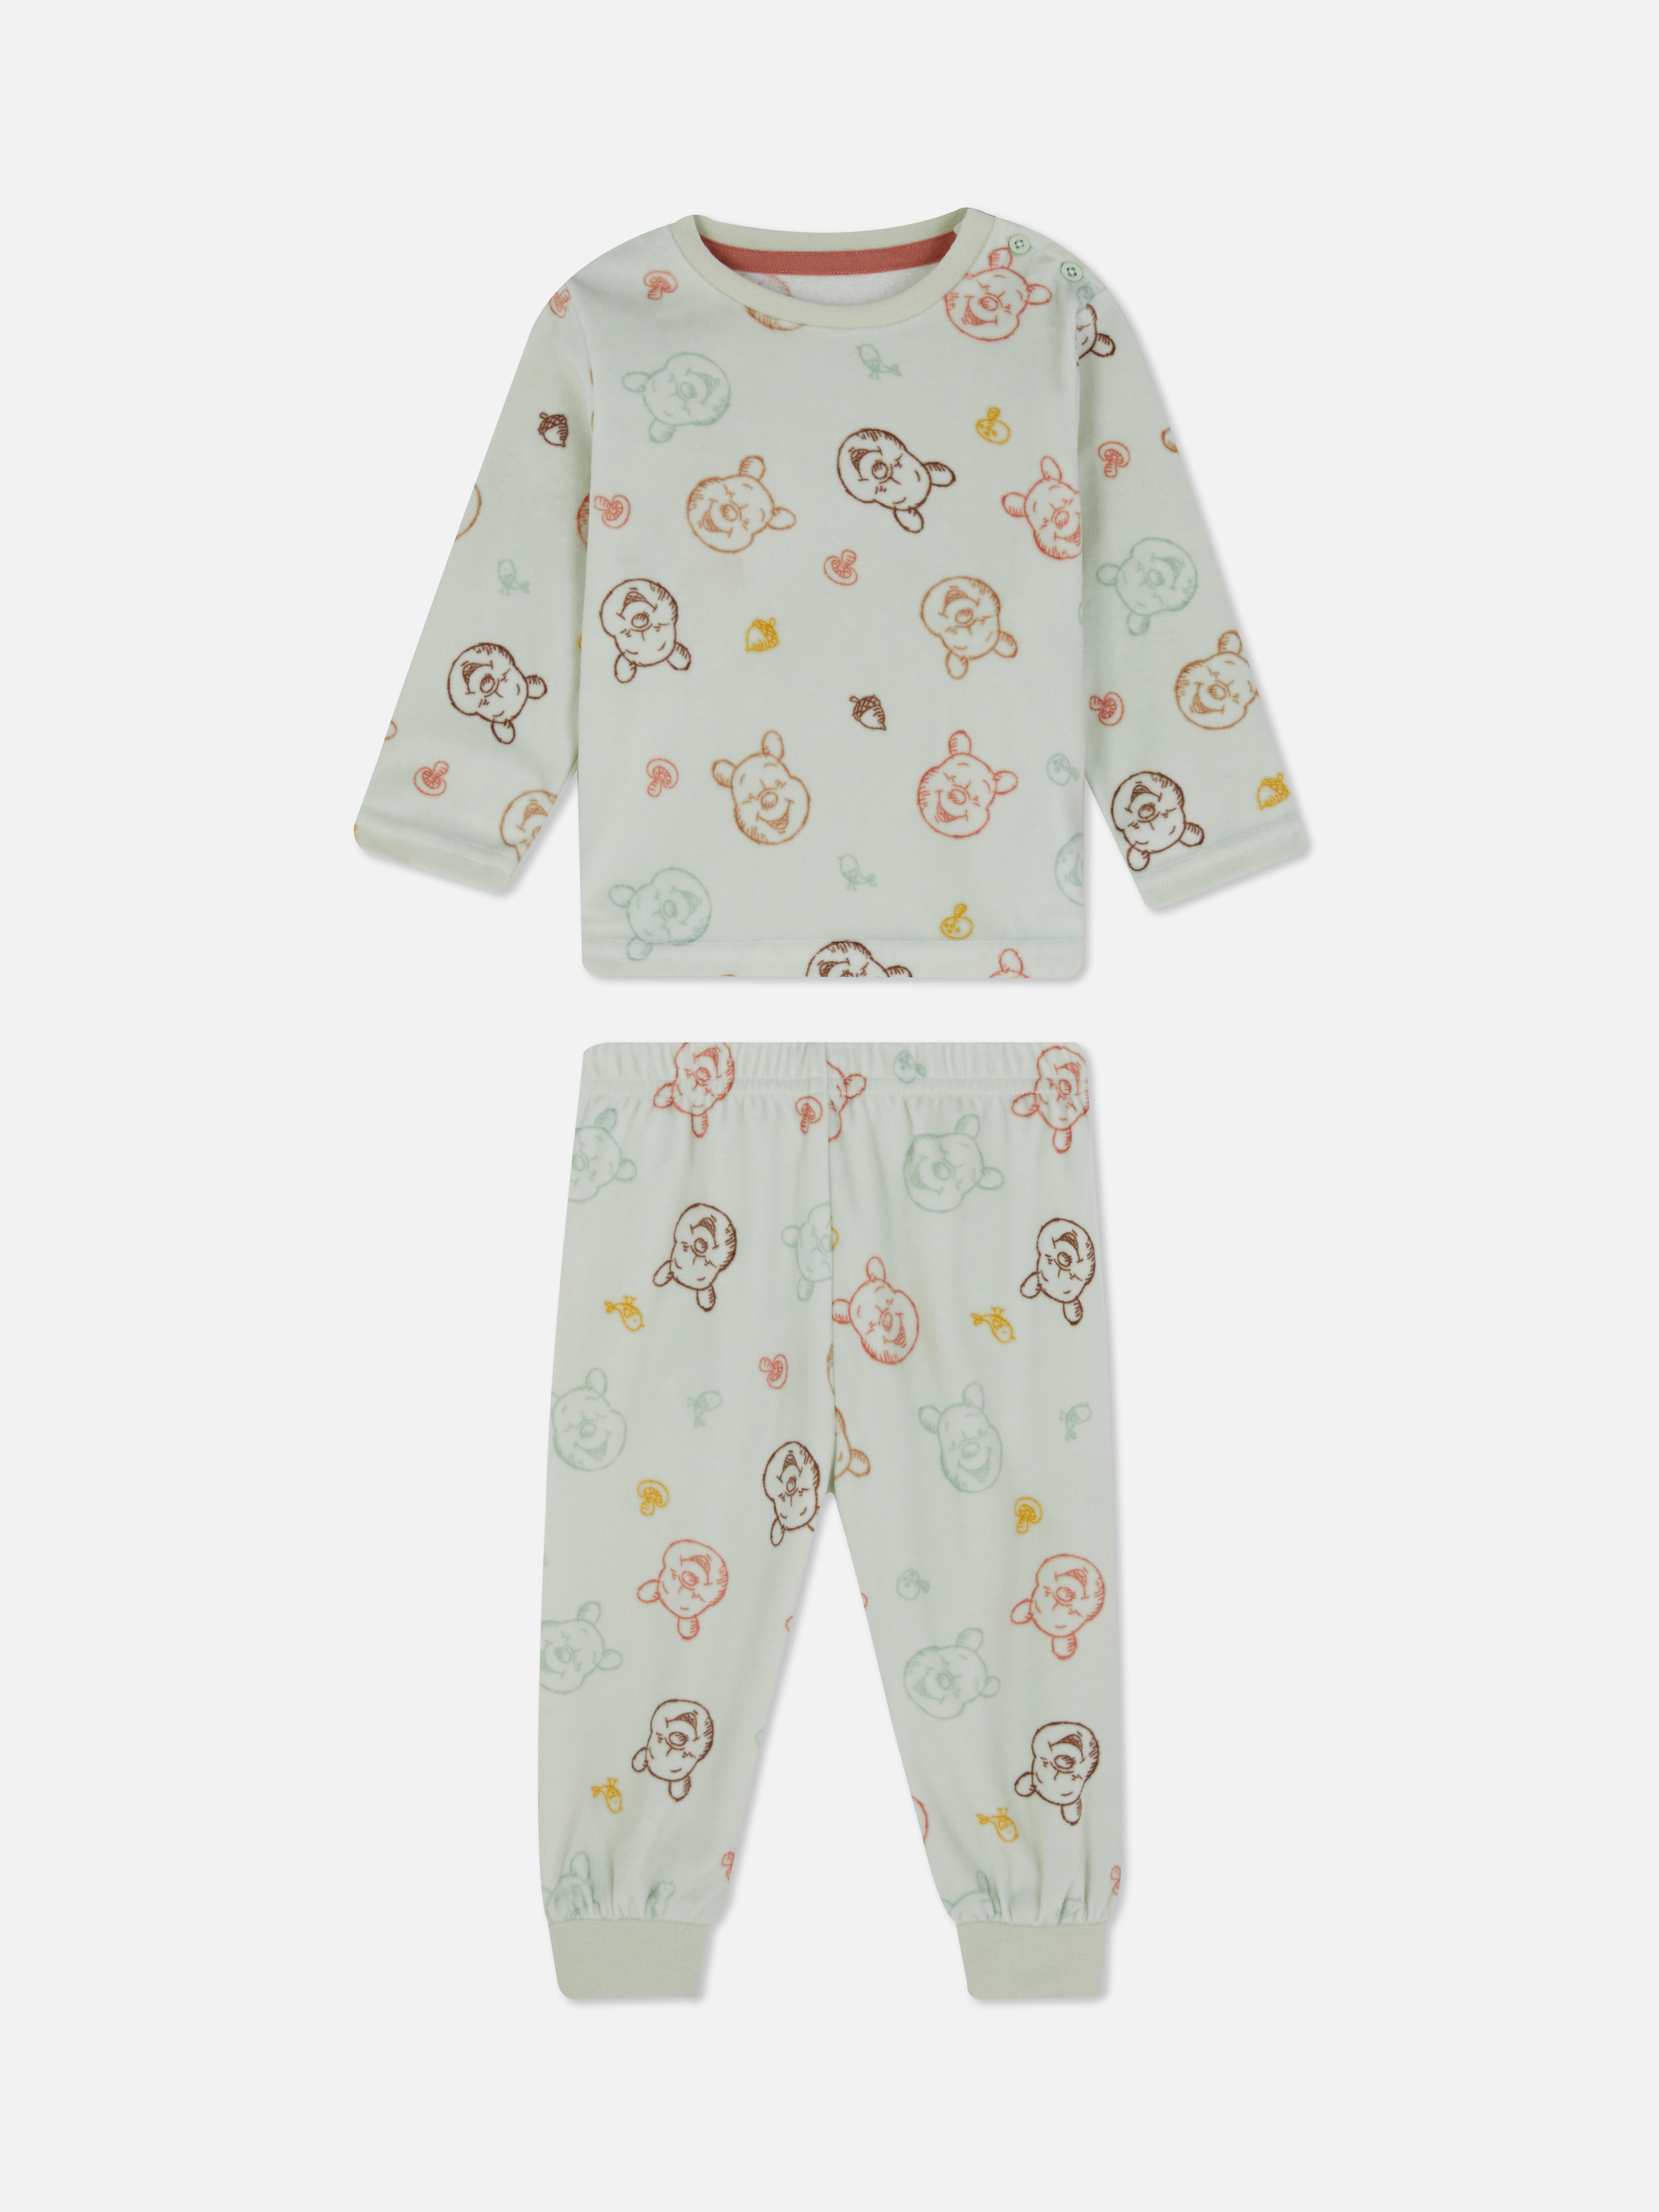 Disney's Winnie the Pooh Minky Pyjama Set